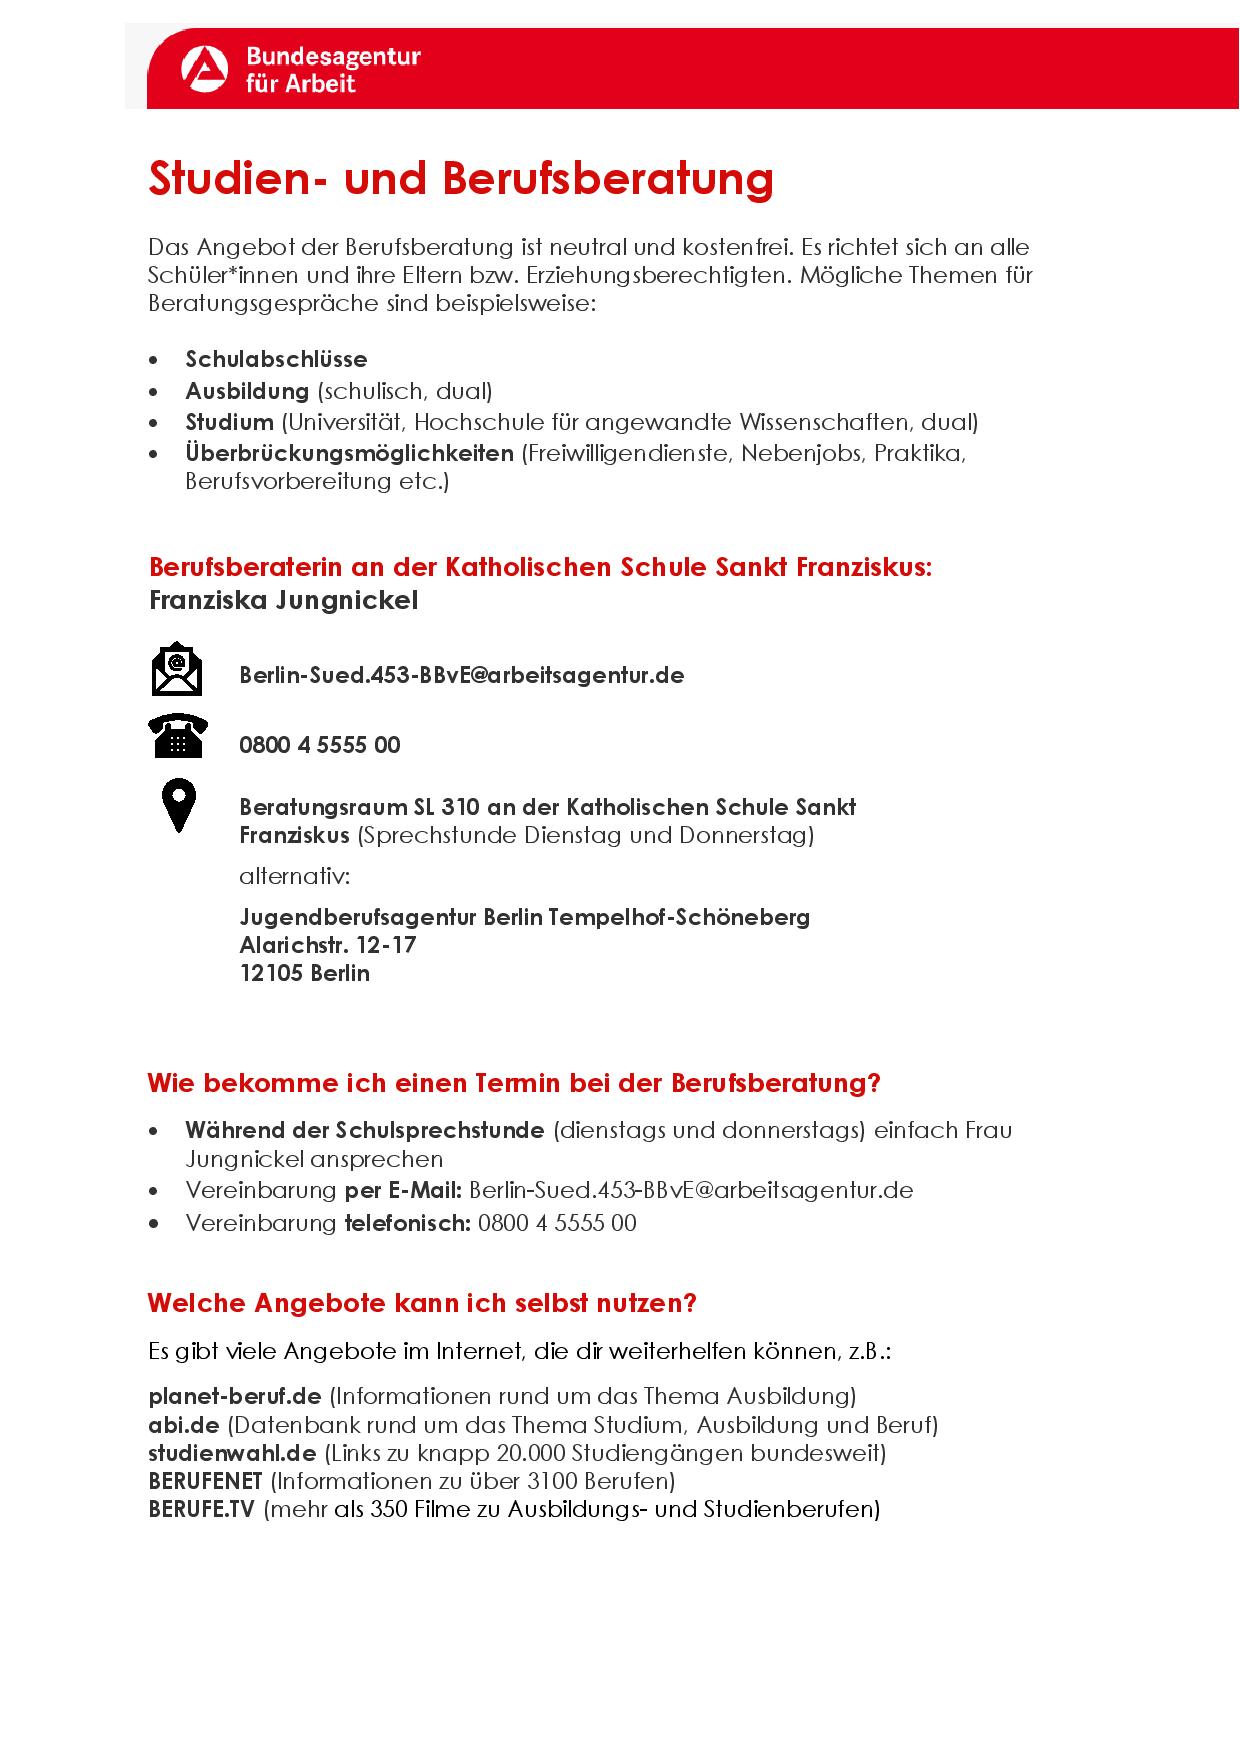 Berufsberatung_KSSF Homepage1)-page-001